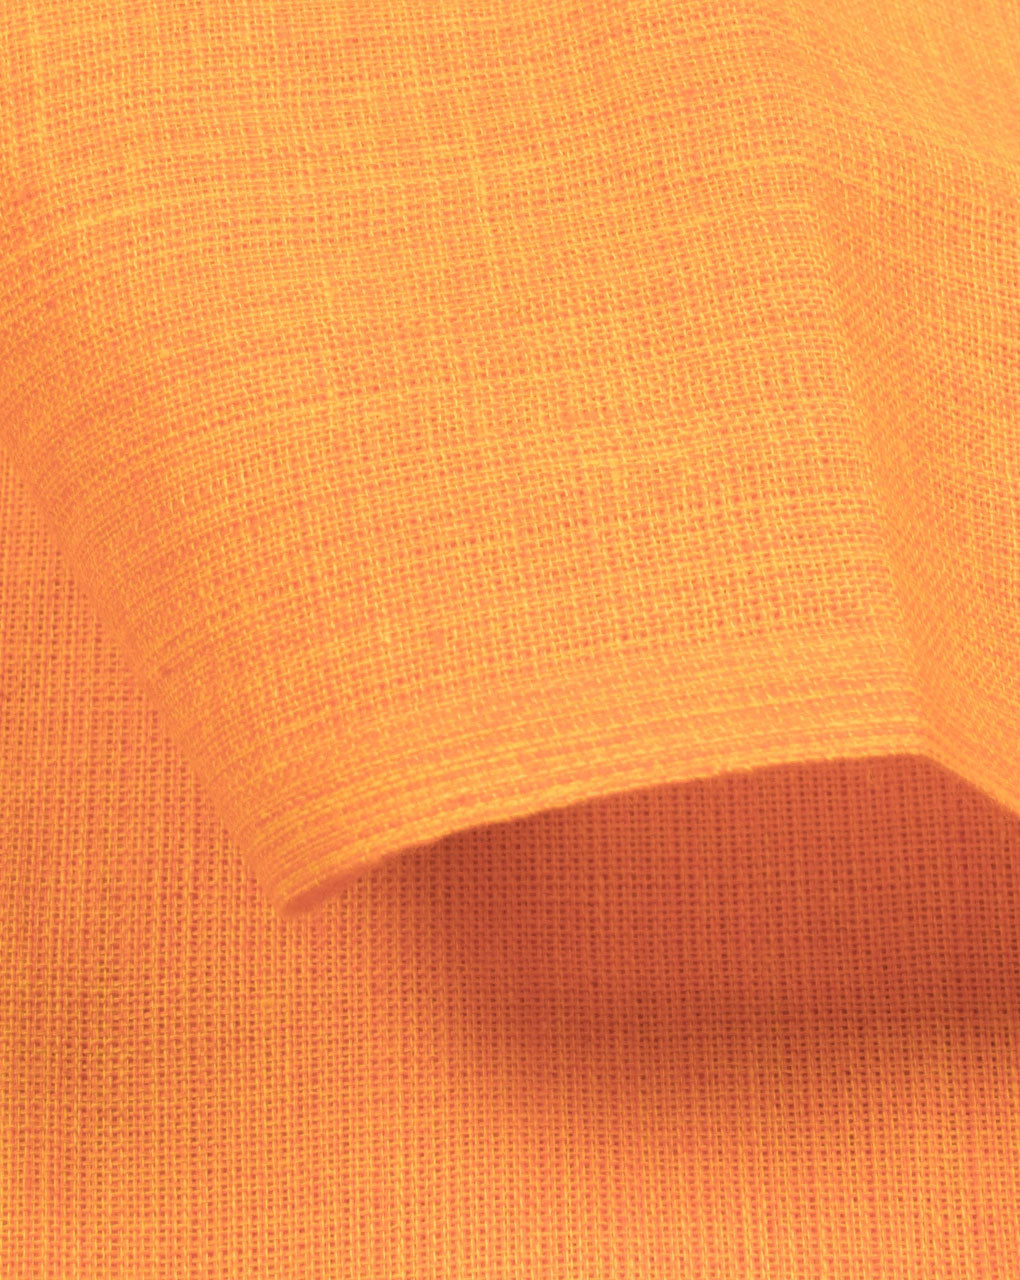 Orange Plain Loom Textured Cotton Fabric - Fabriclore.com